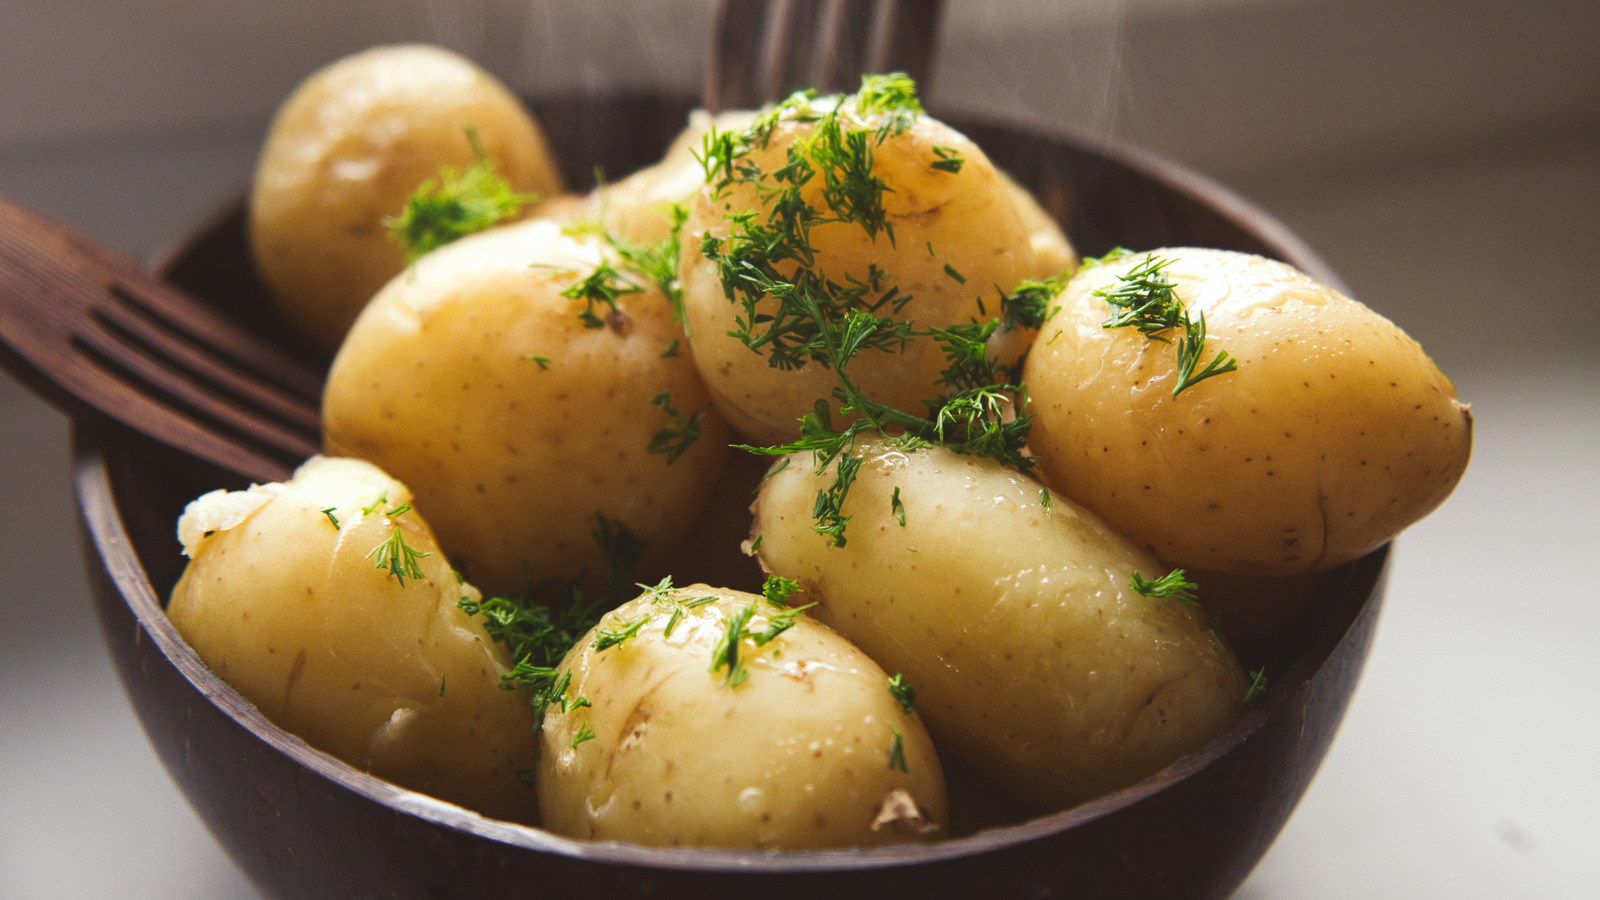 Can i steam potatoes фото 113